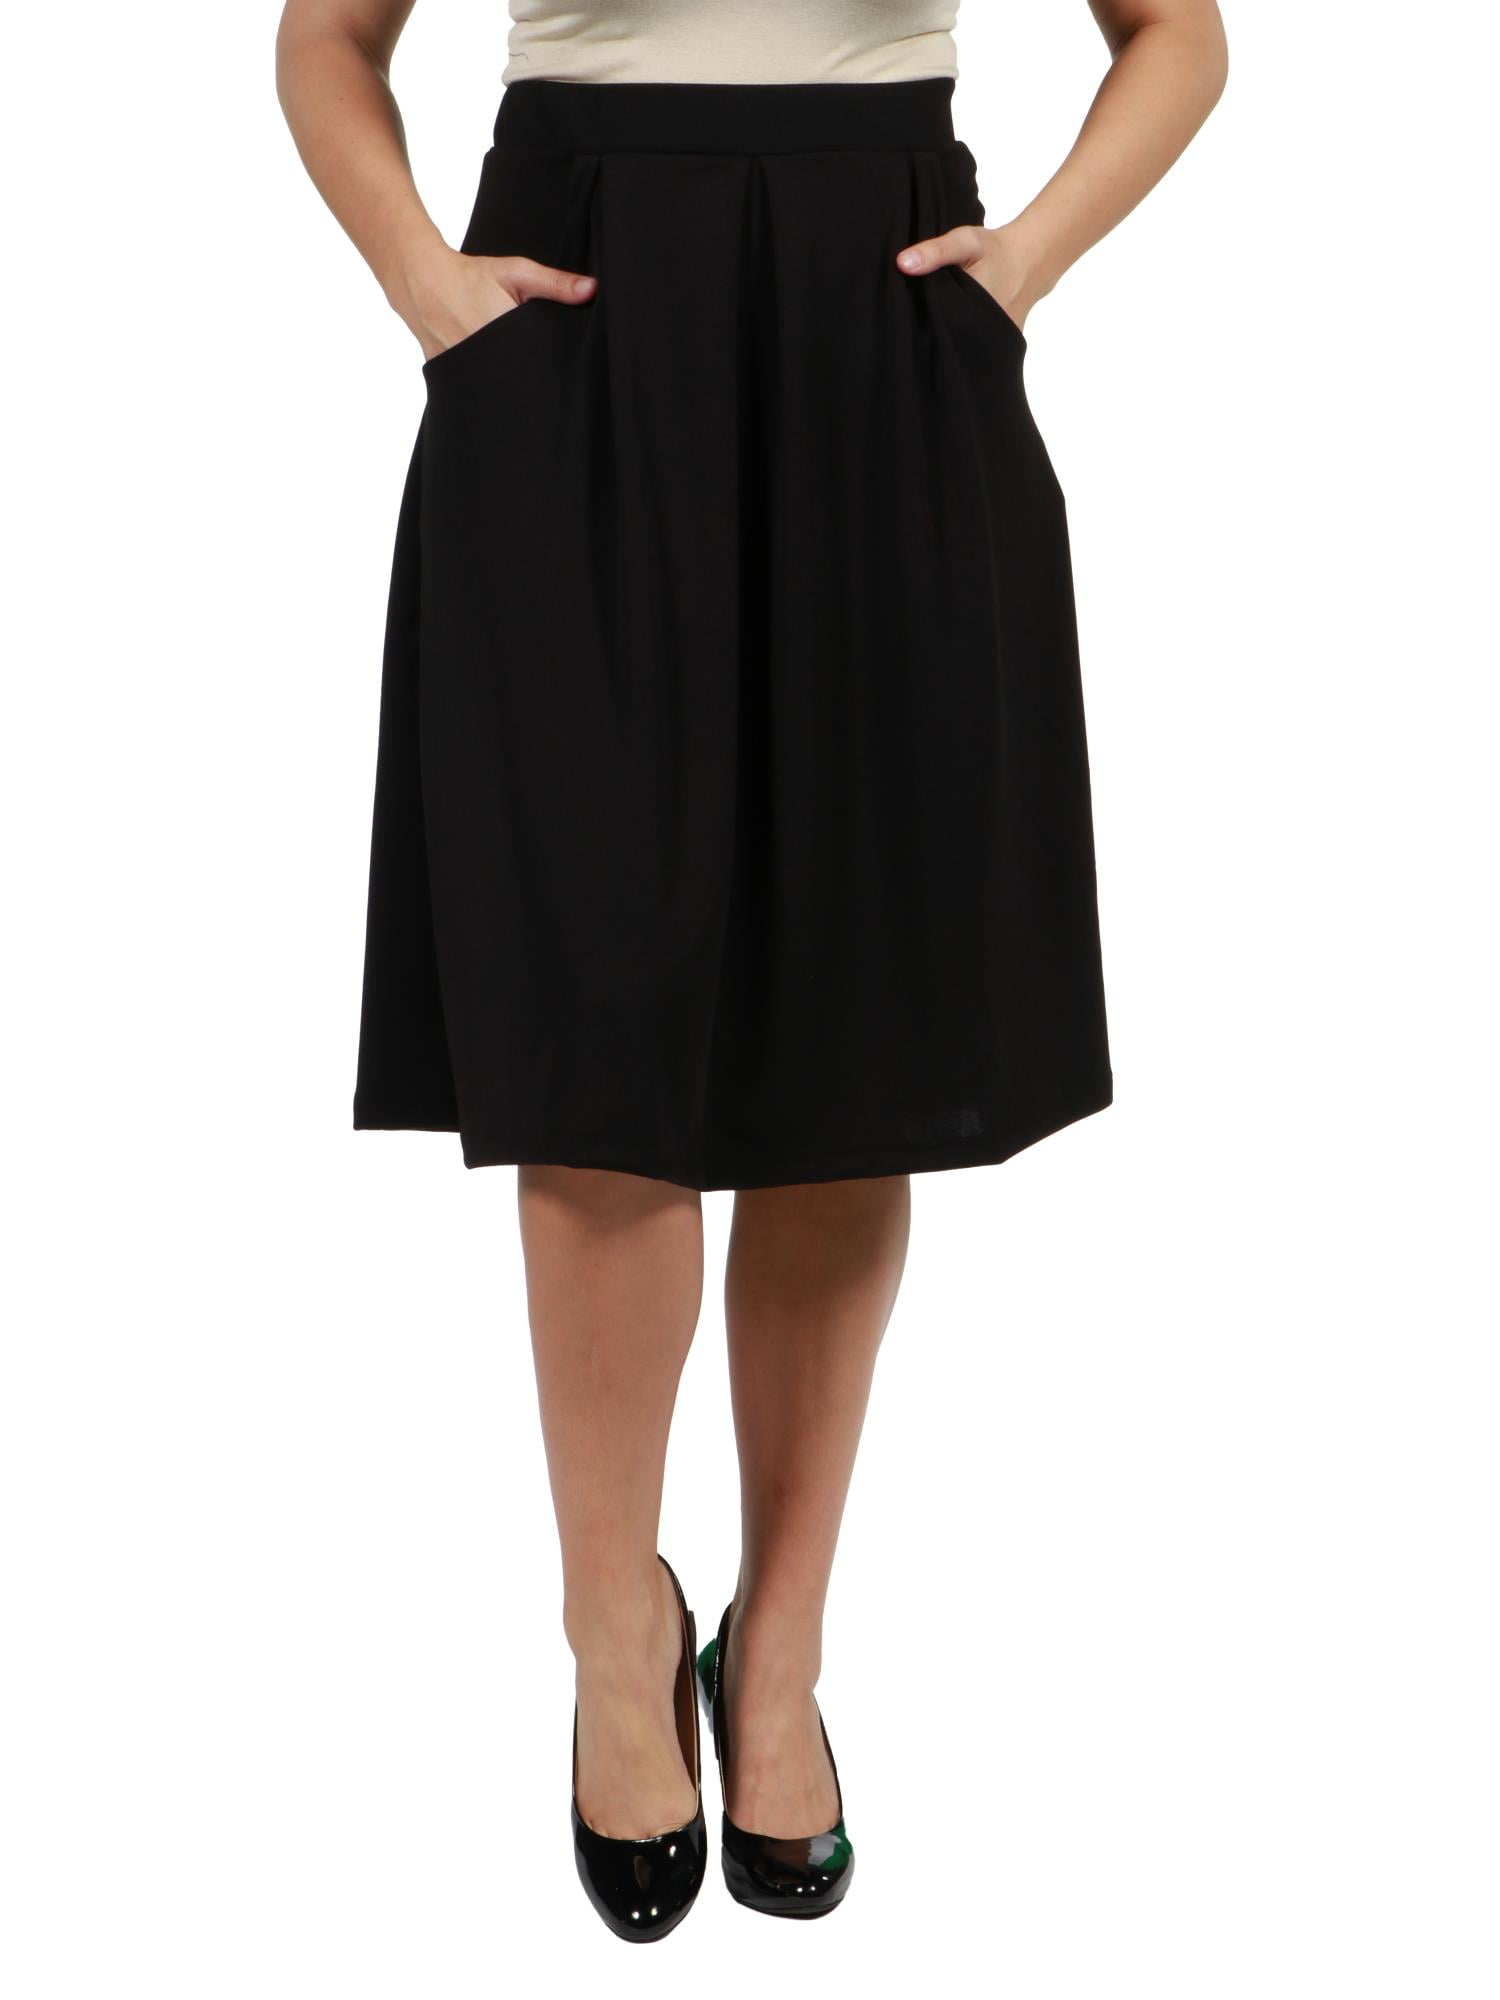 24/7 Comfort Apparel Women's Classic Knee Length Black Skirt With ...